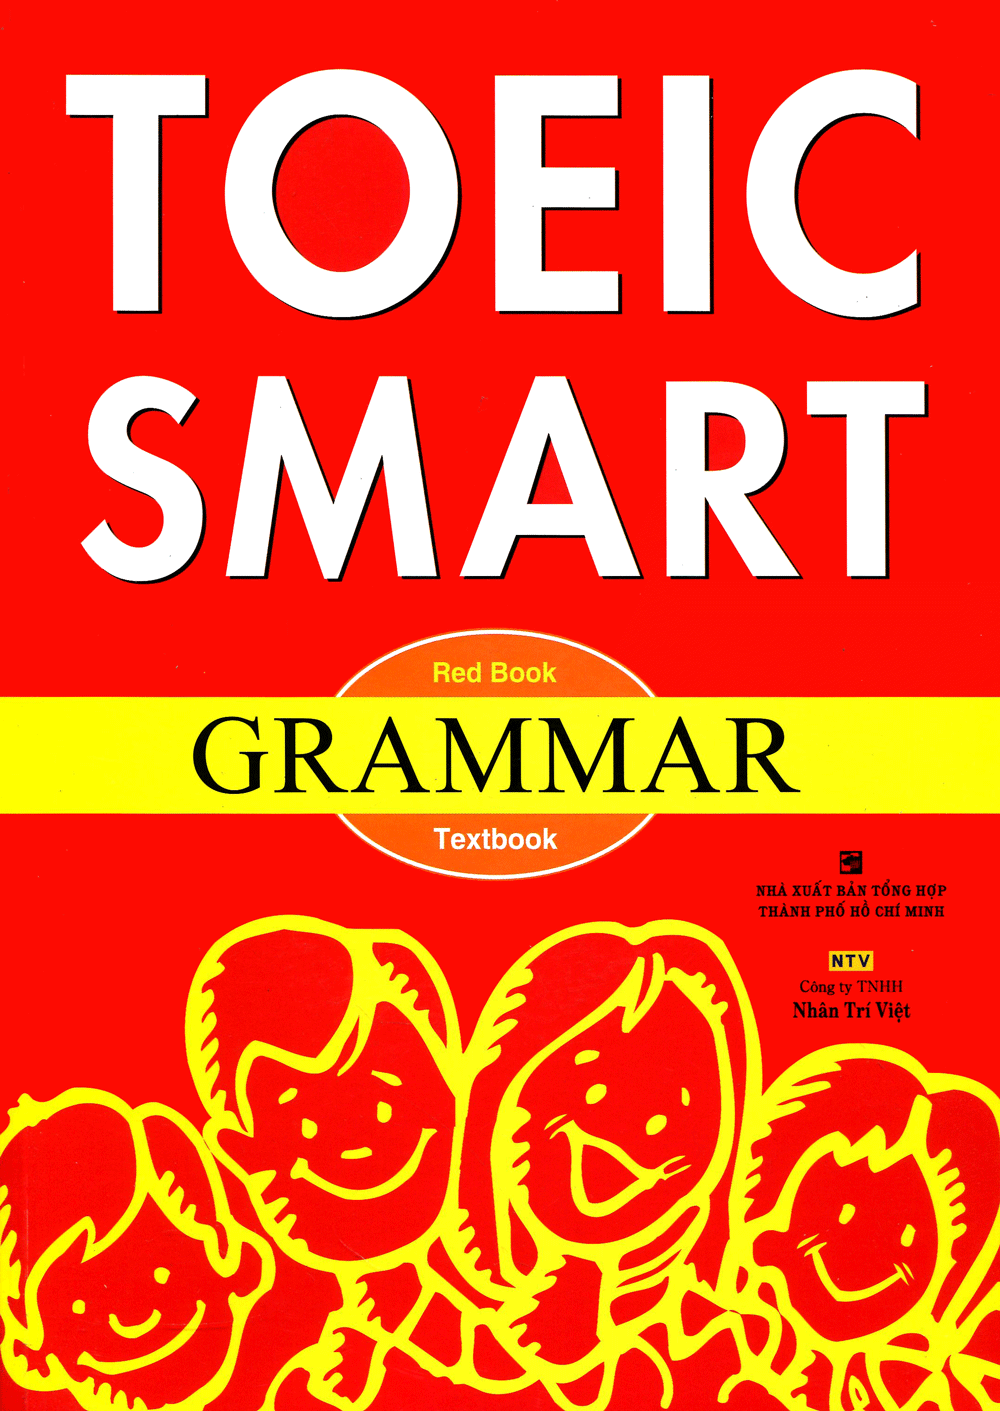 Toeic Smart - Red Book Grammar